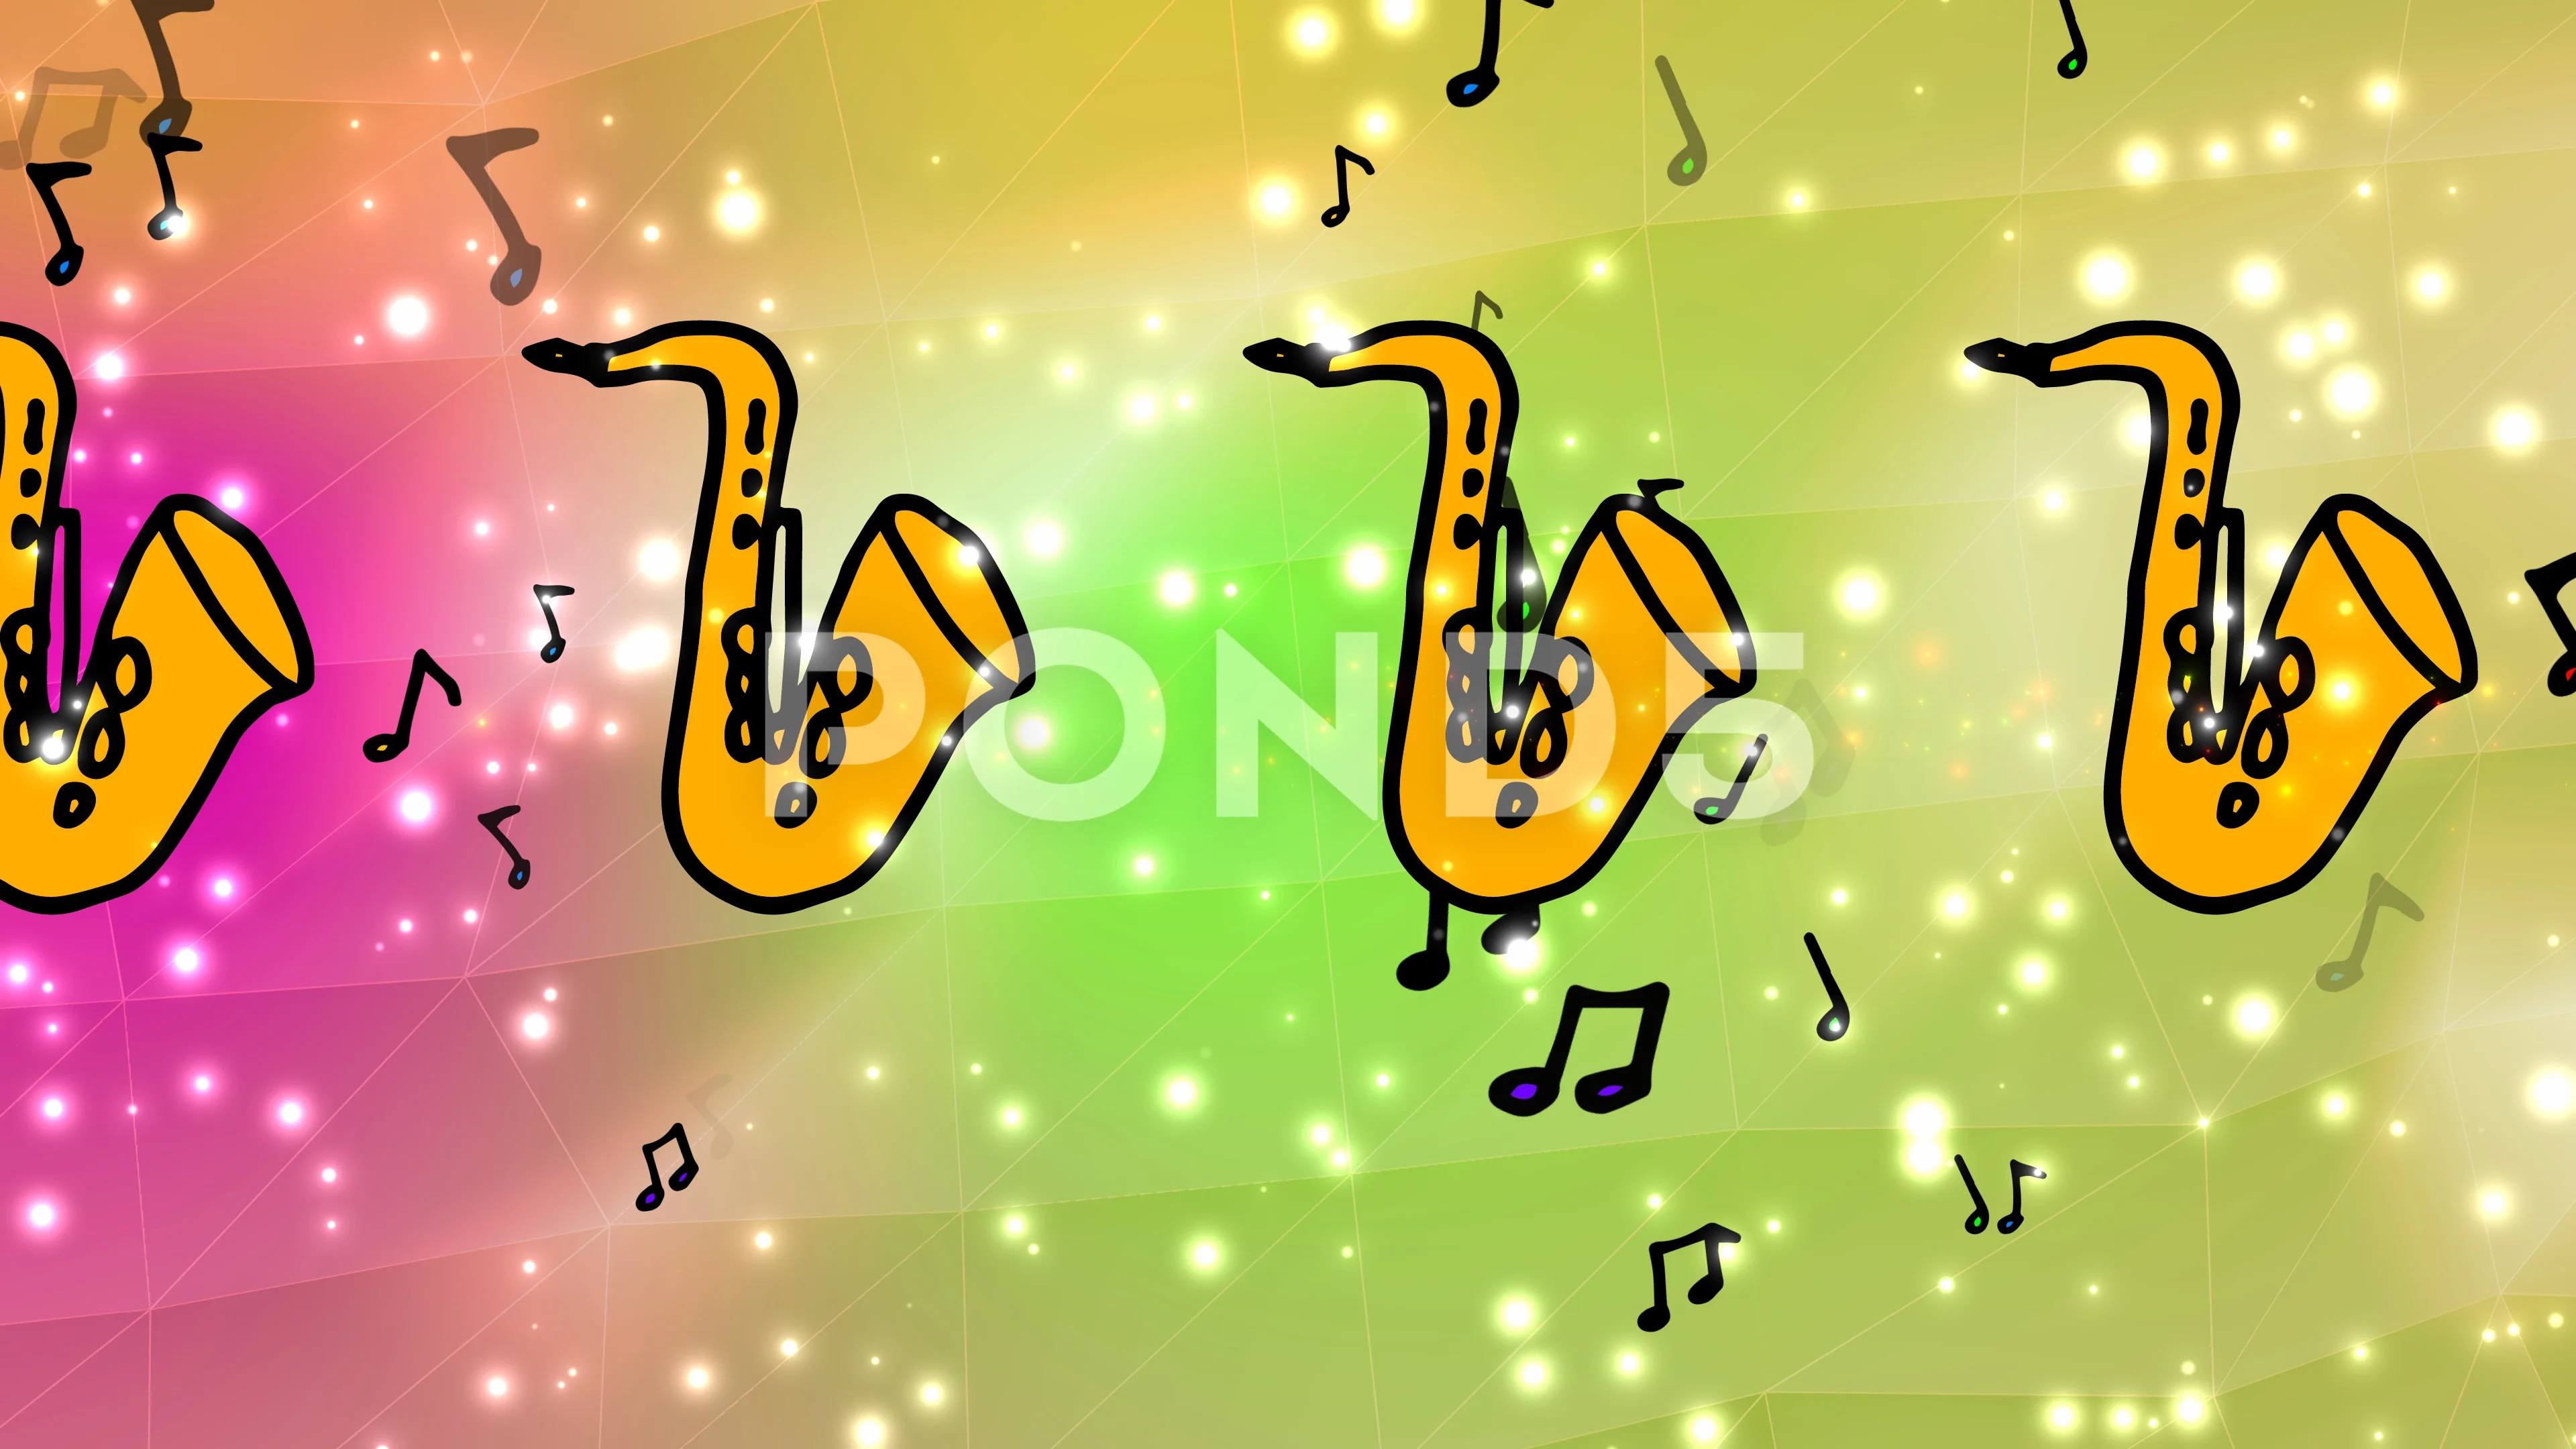 https://images.pond5.com/dancing-animated-saxophone-cartoon-party-117262515_prevstill.jpeg